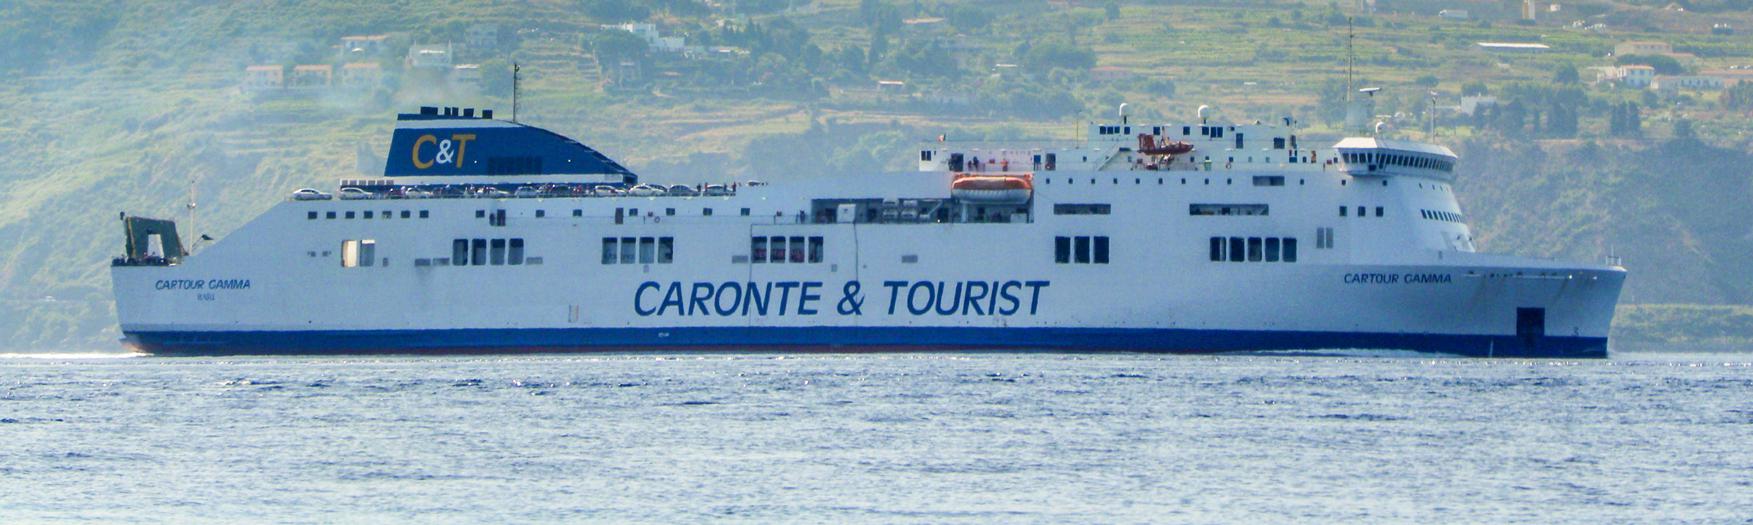 caronte & tourist ferry messina